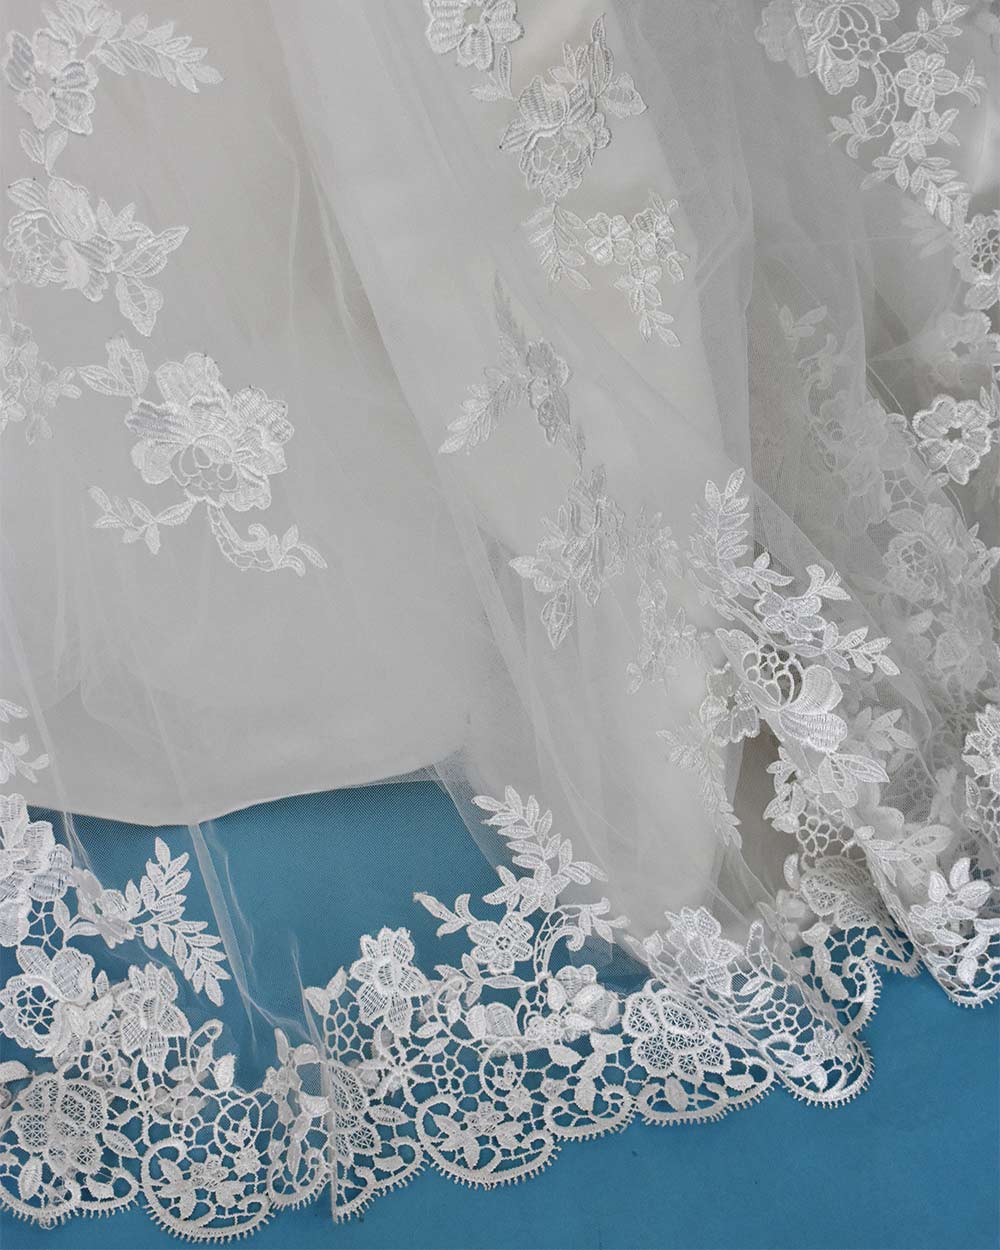 Venus Ivory Lace A Line Wedding Dress Size 14